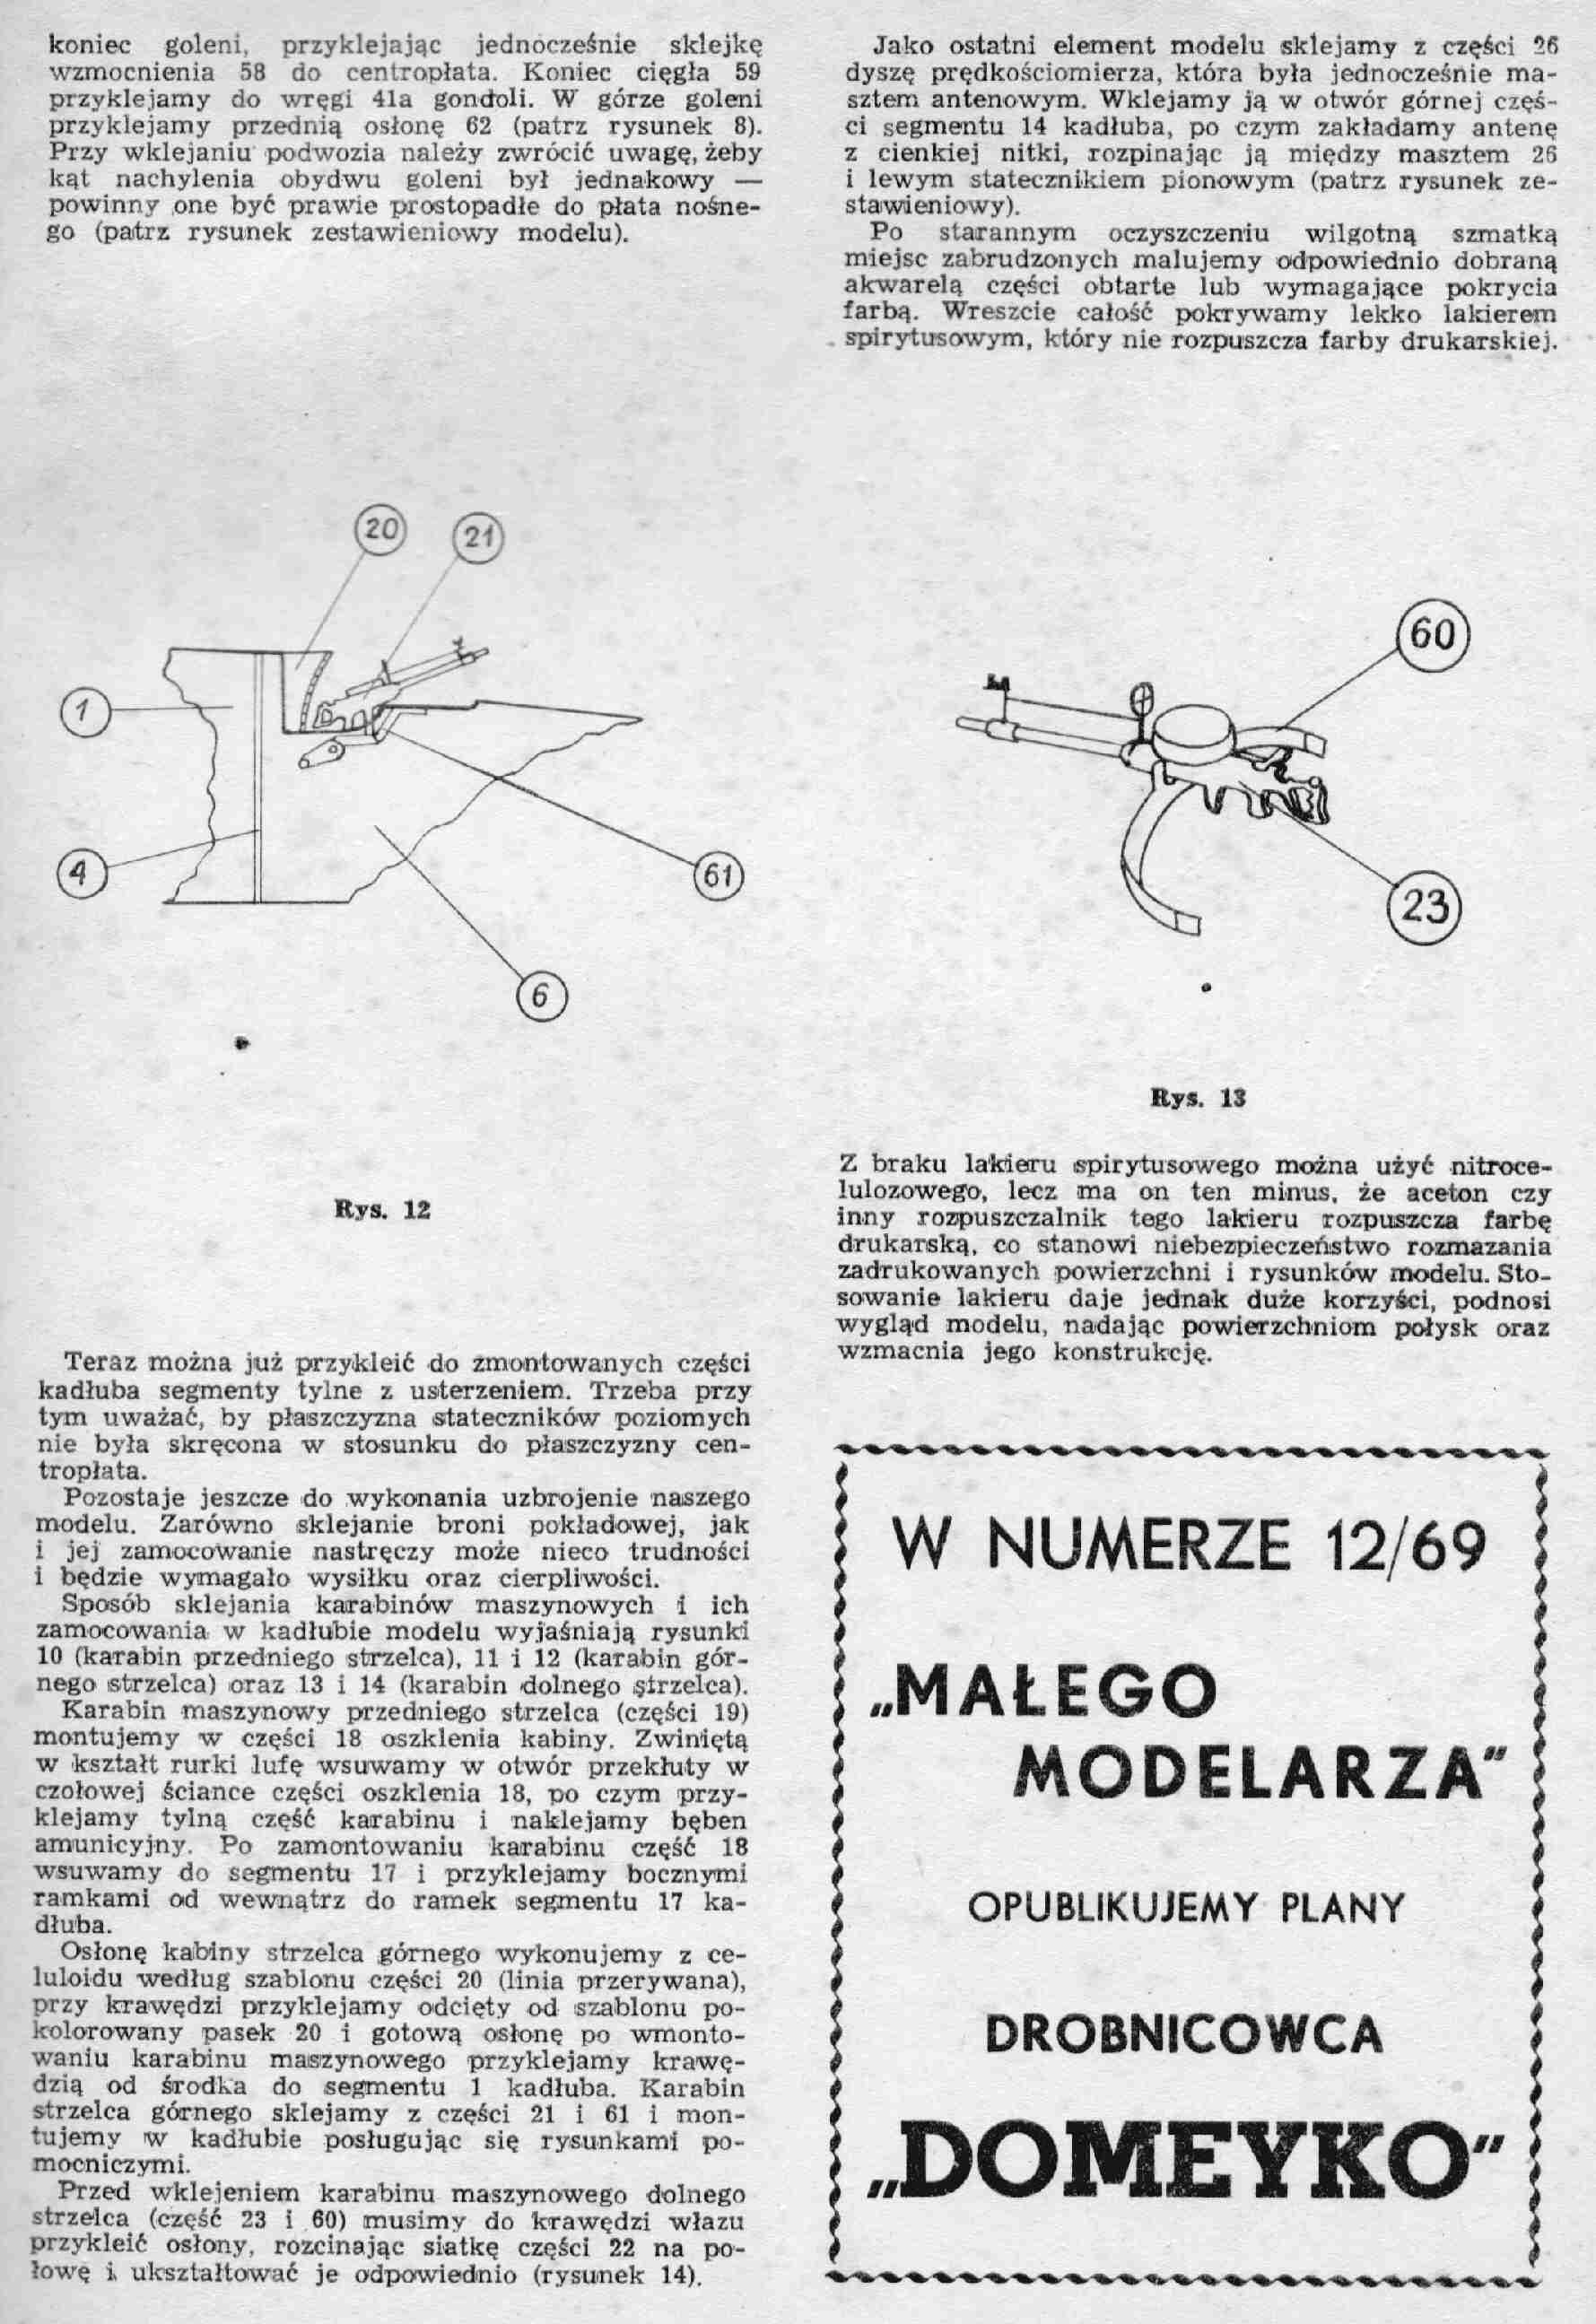 "Maly Modelarz" 10-11, 1969, 6 c.